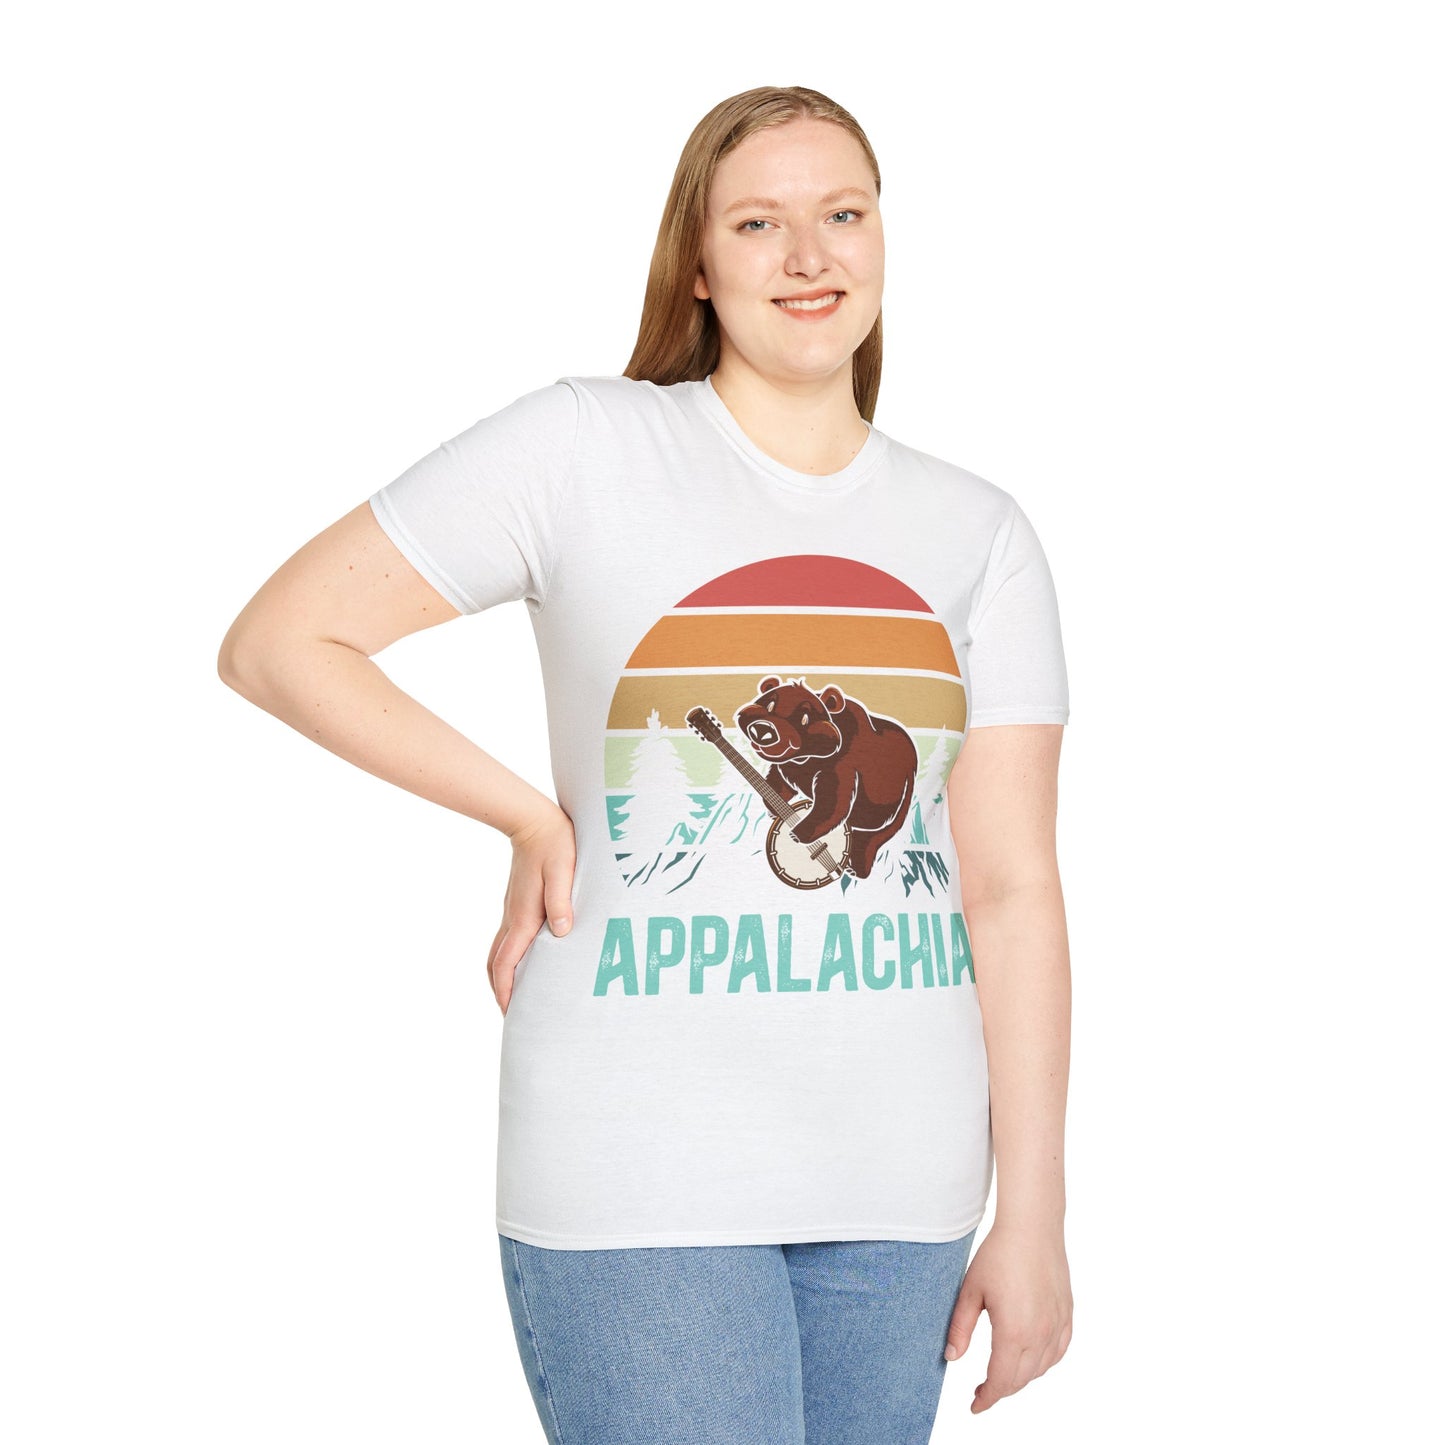 Appalachia T-Shirt